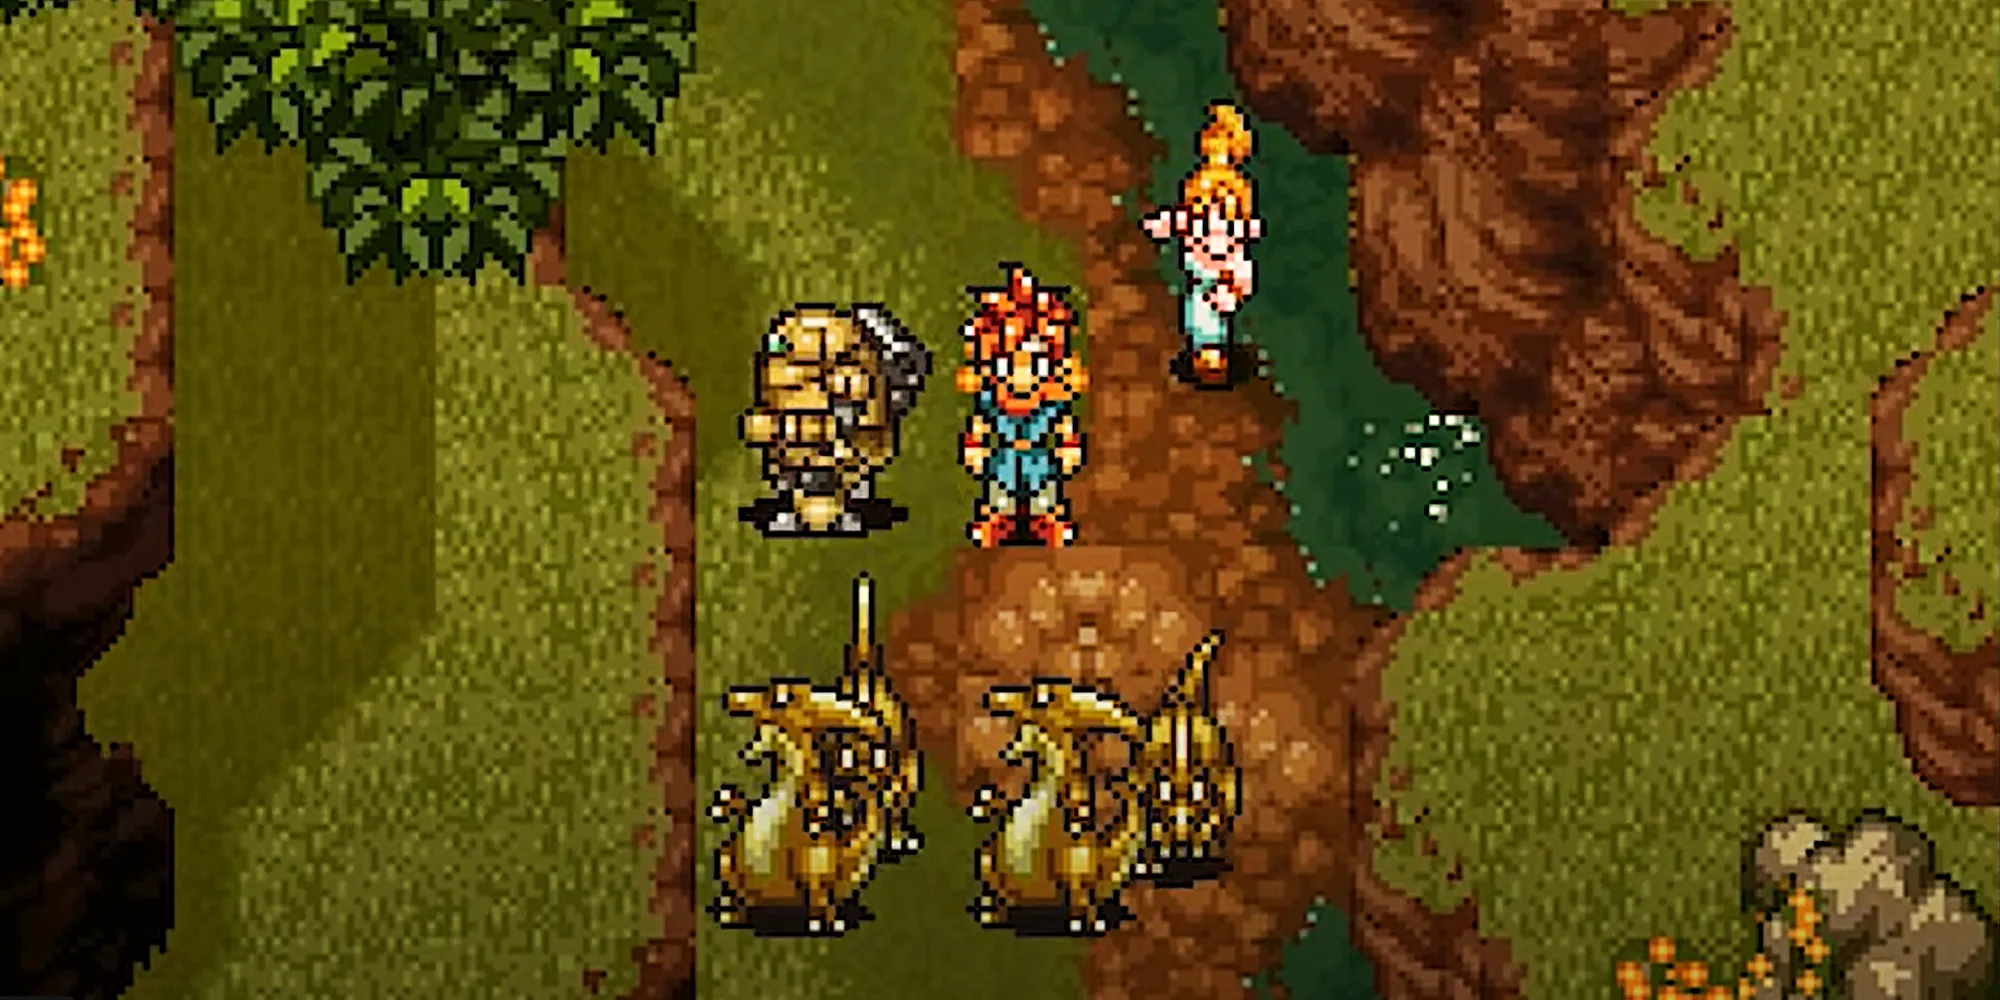 Screenshot di Chrono Trigger con Robo, Chrono e Marle di fronte a un gruppo di dinosauri